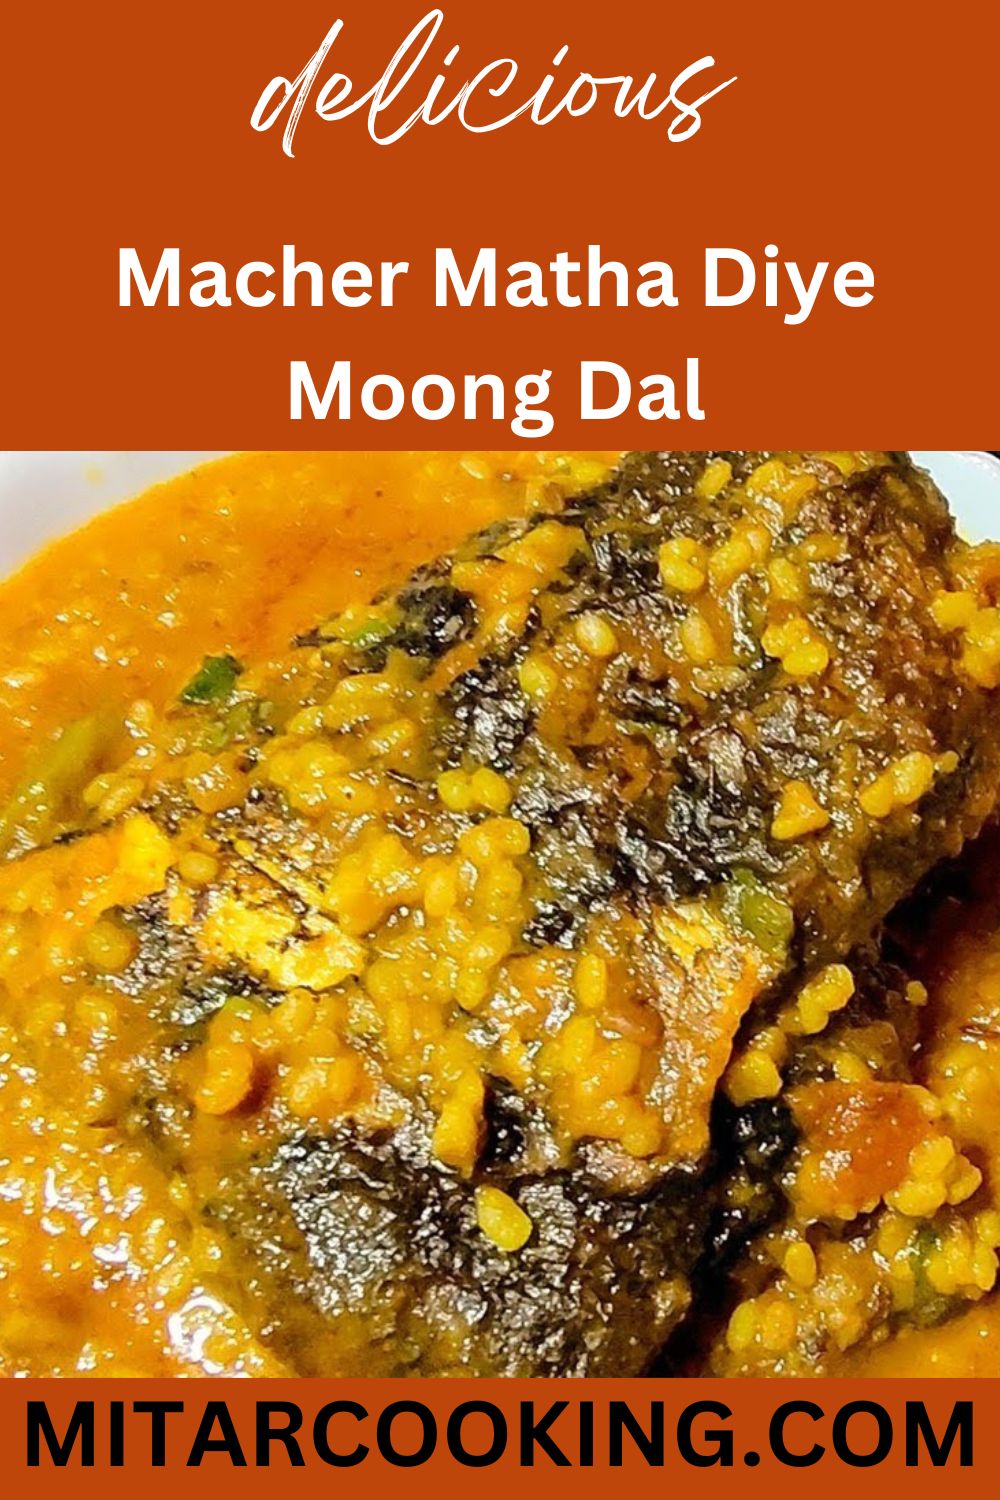 Macher Matha Diye Moong Dal